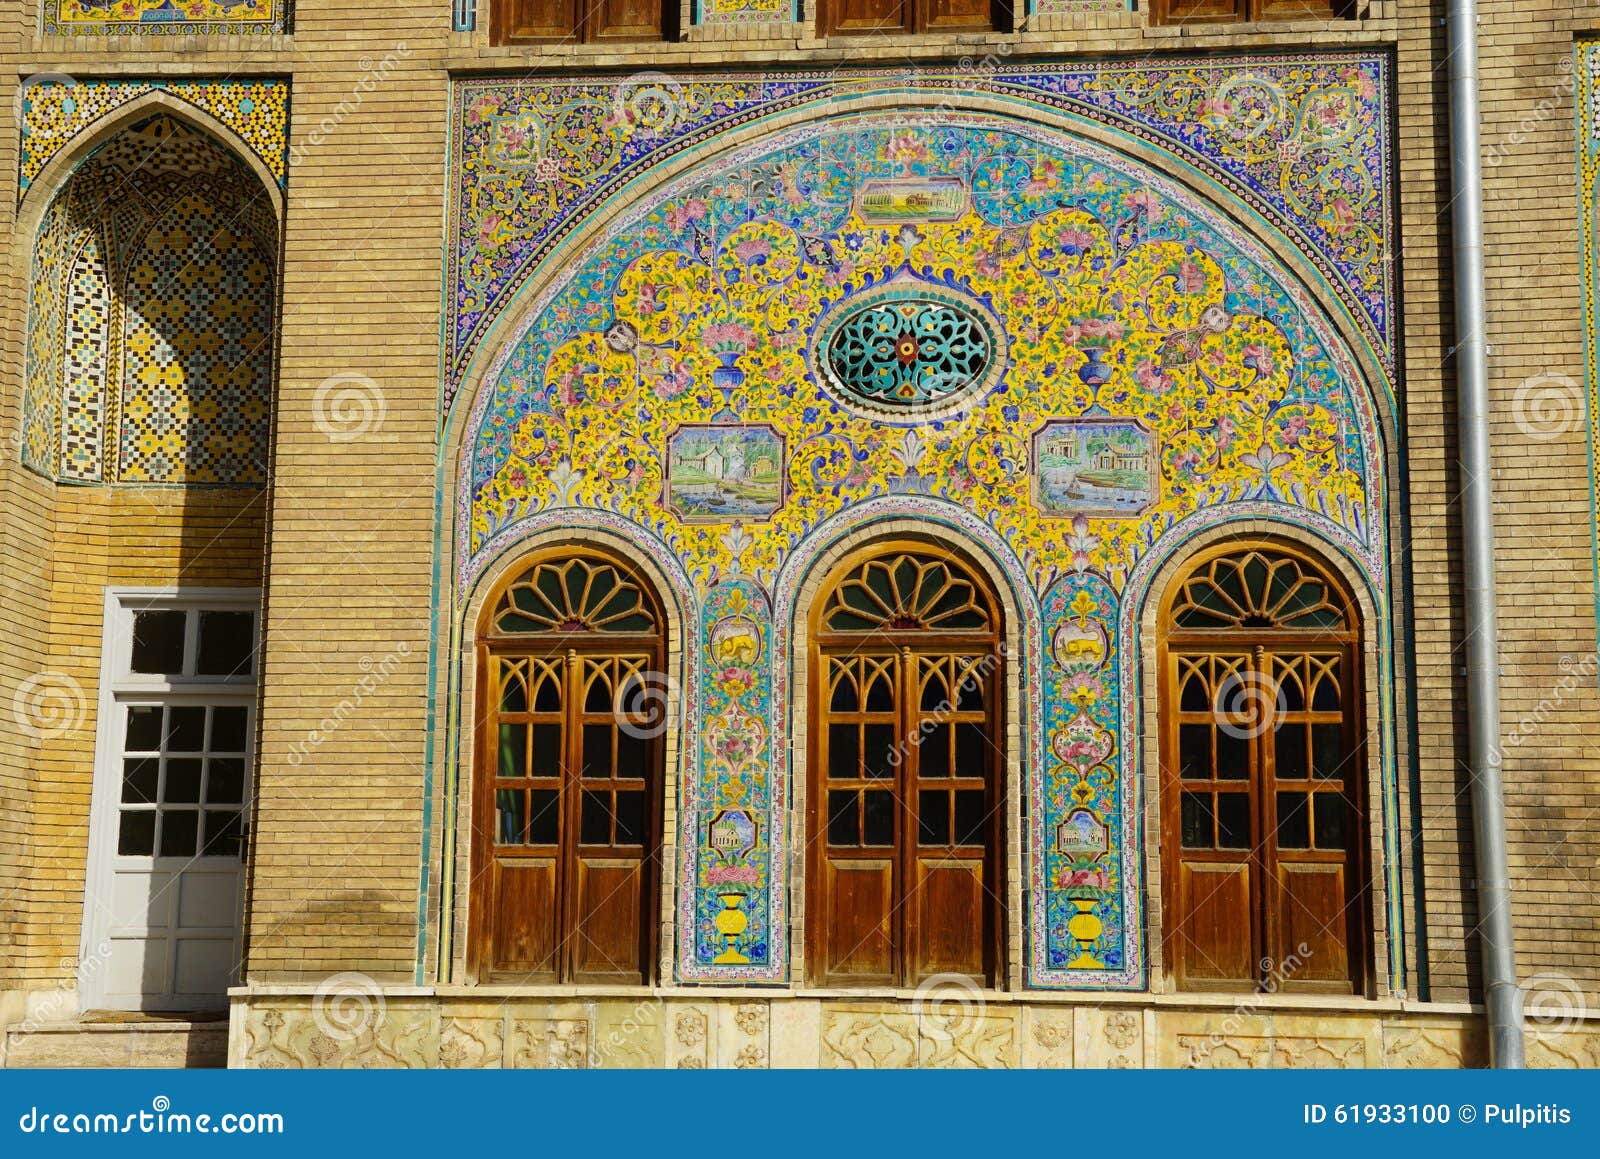 edifice of the sun of golestan palace,tehran, iran.